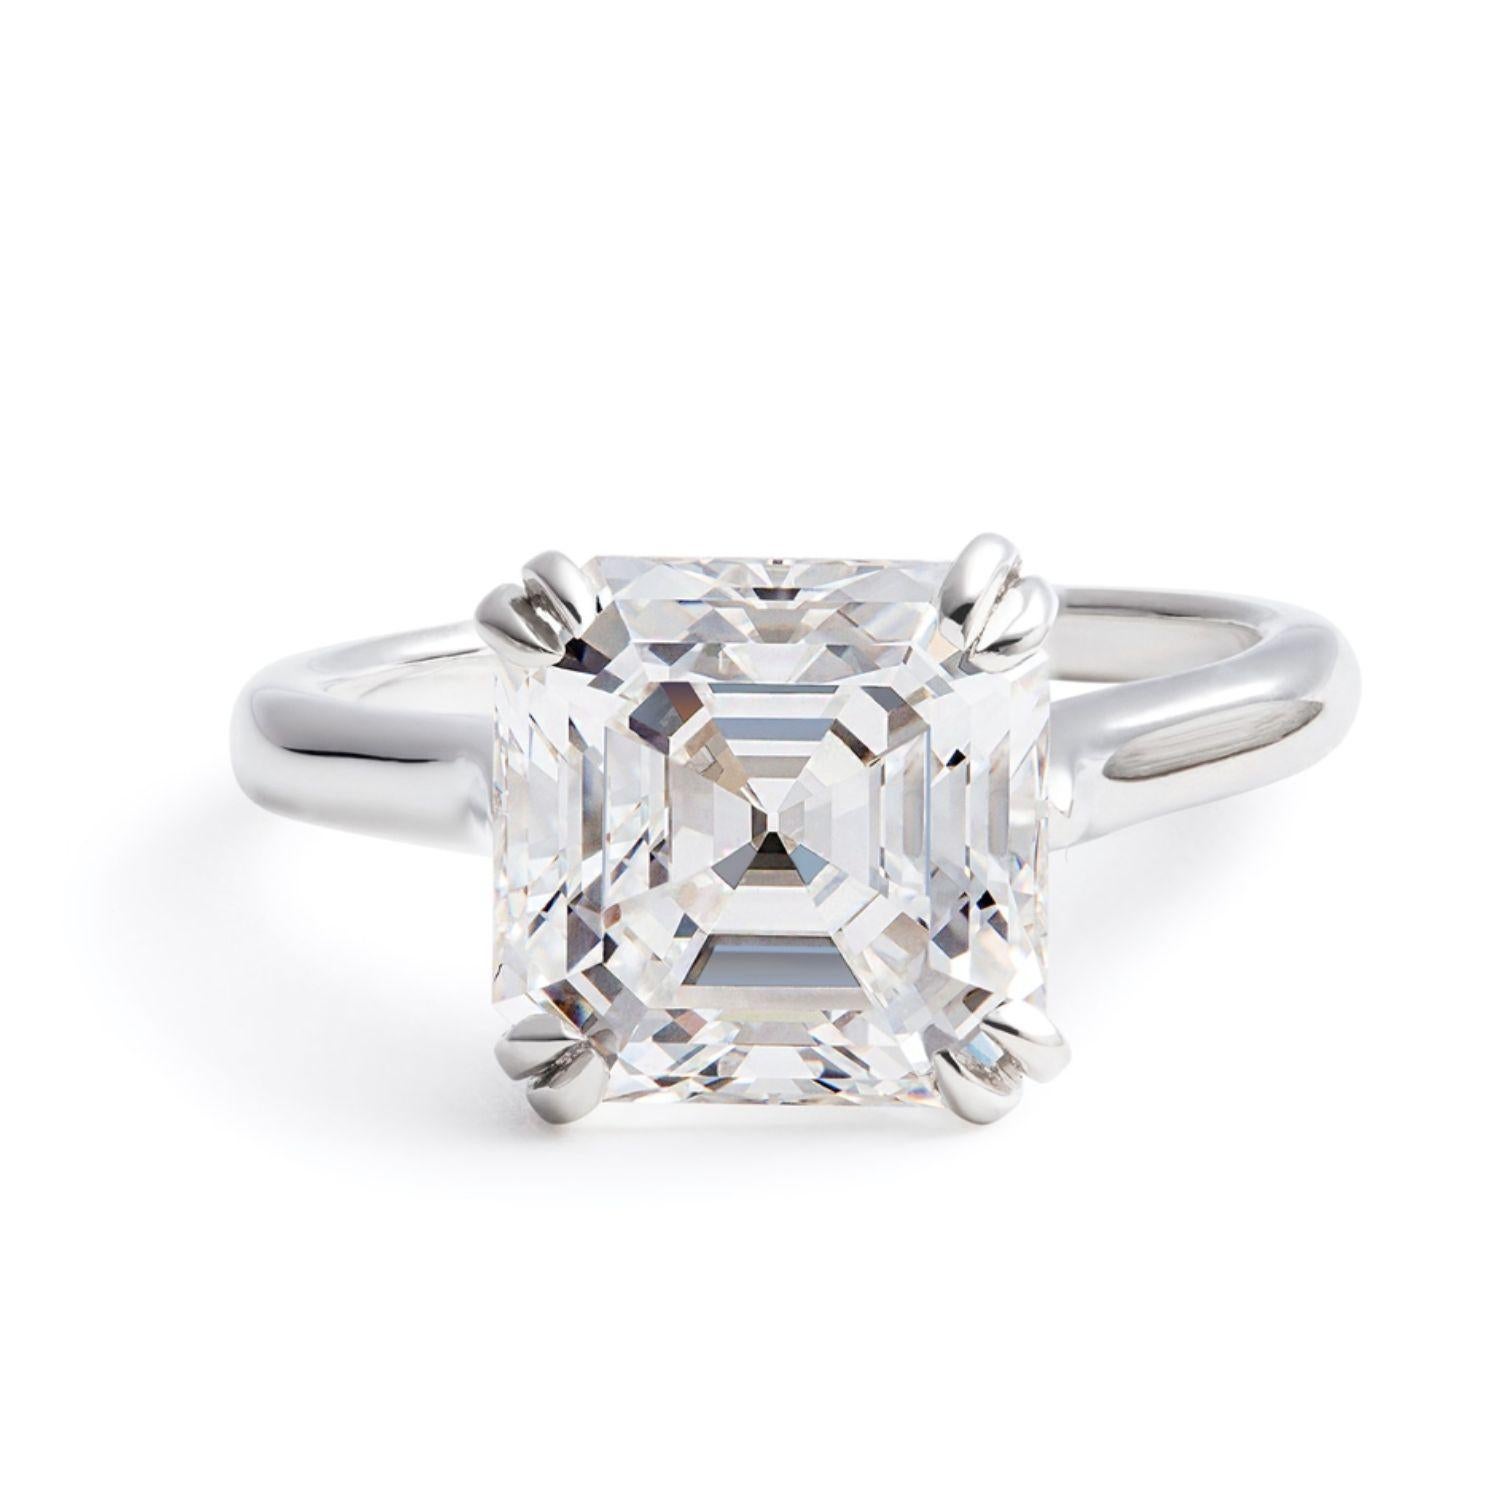 Modern Certified 4.01 Carat Square Emerald Cut Diamond Engagement Ring